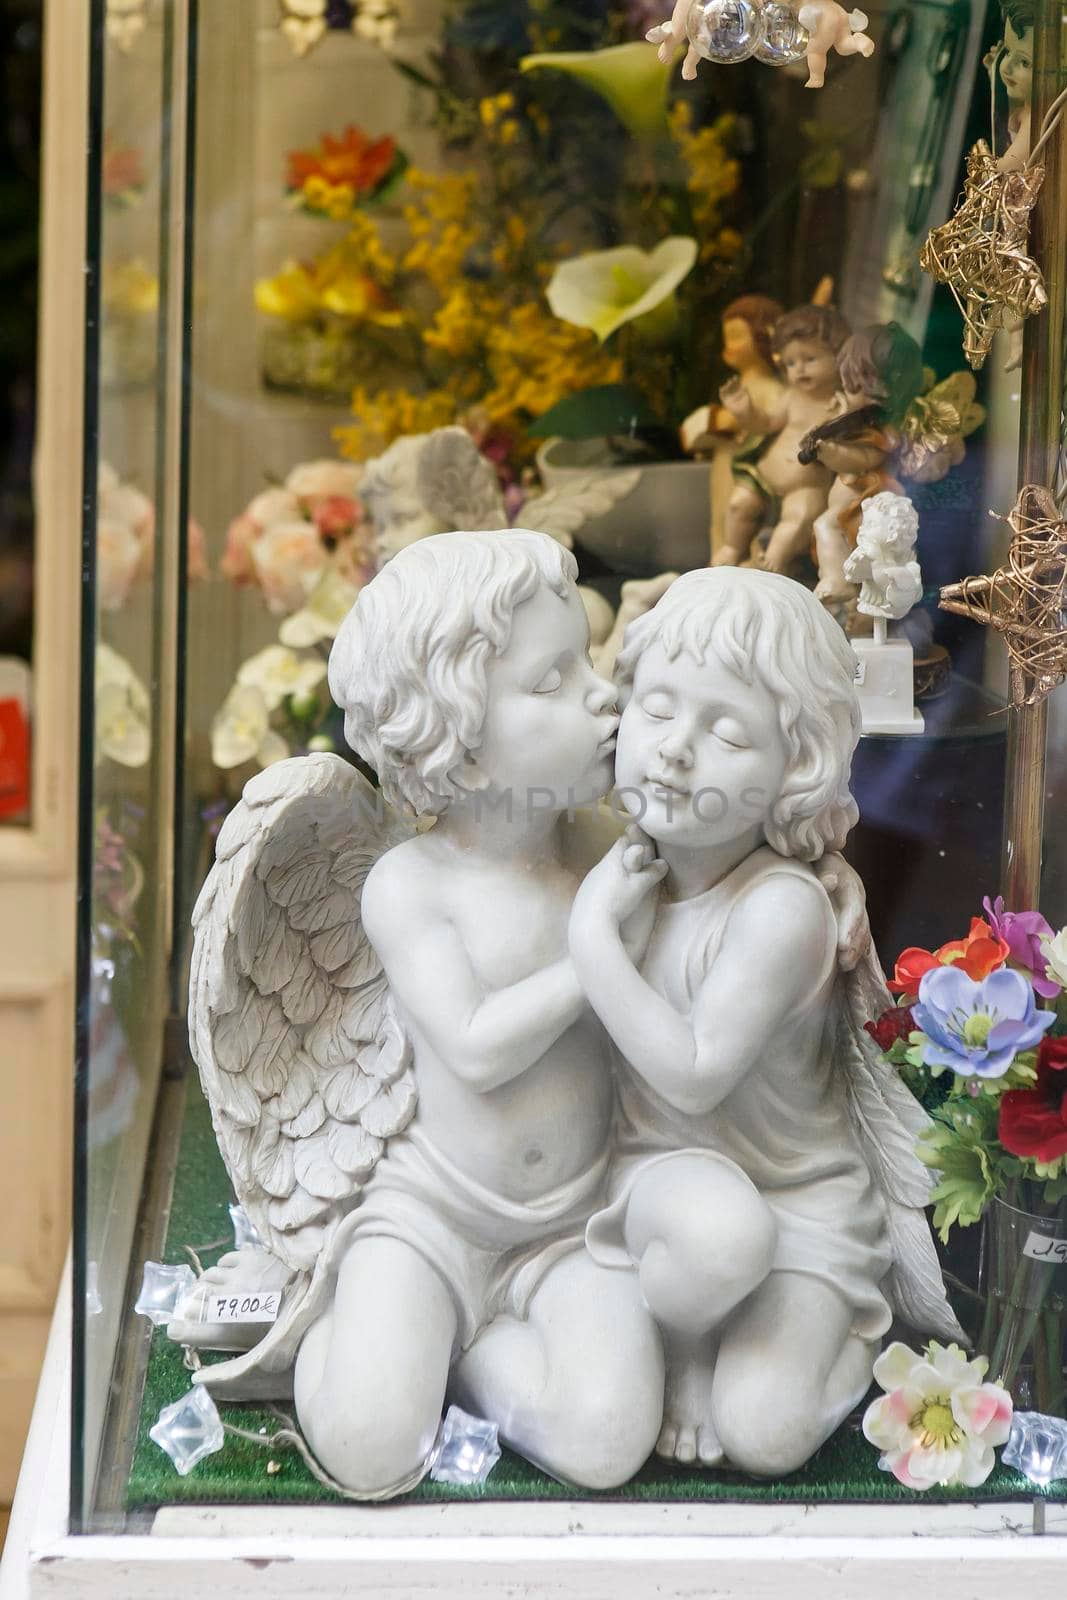 Barcelona, Spain - 20 July 2018, Marble angels in an antique shop window